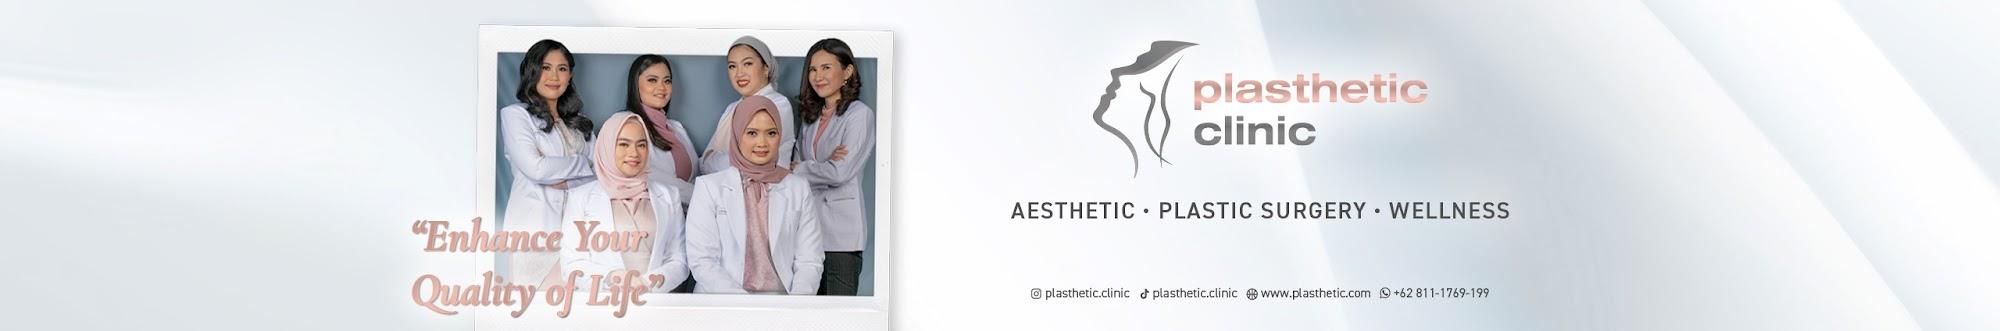 Plasthetic Clinic